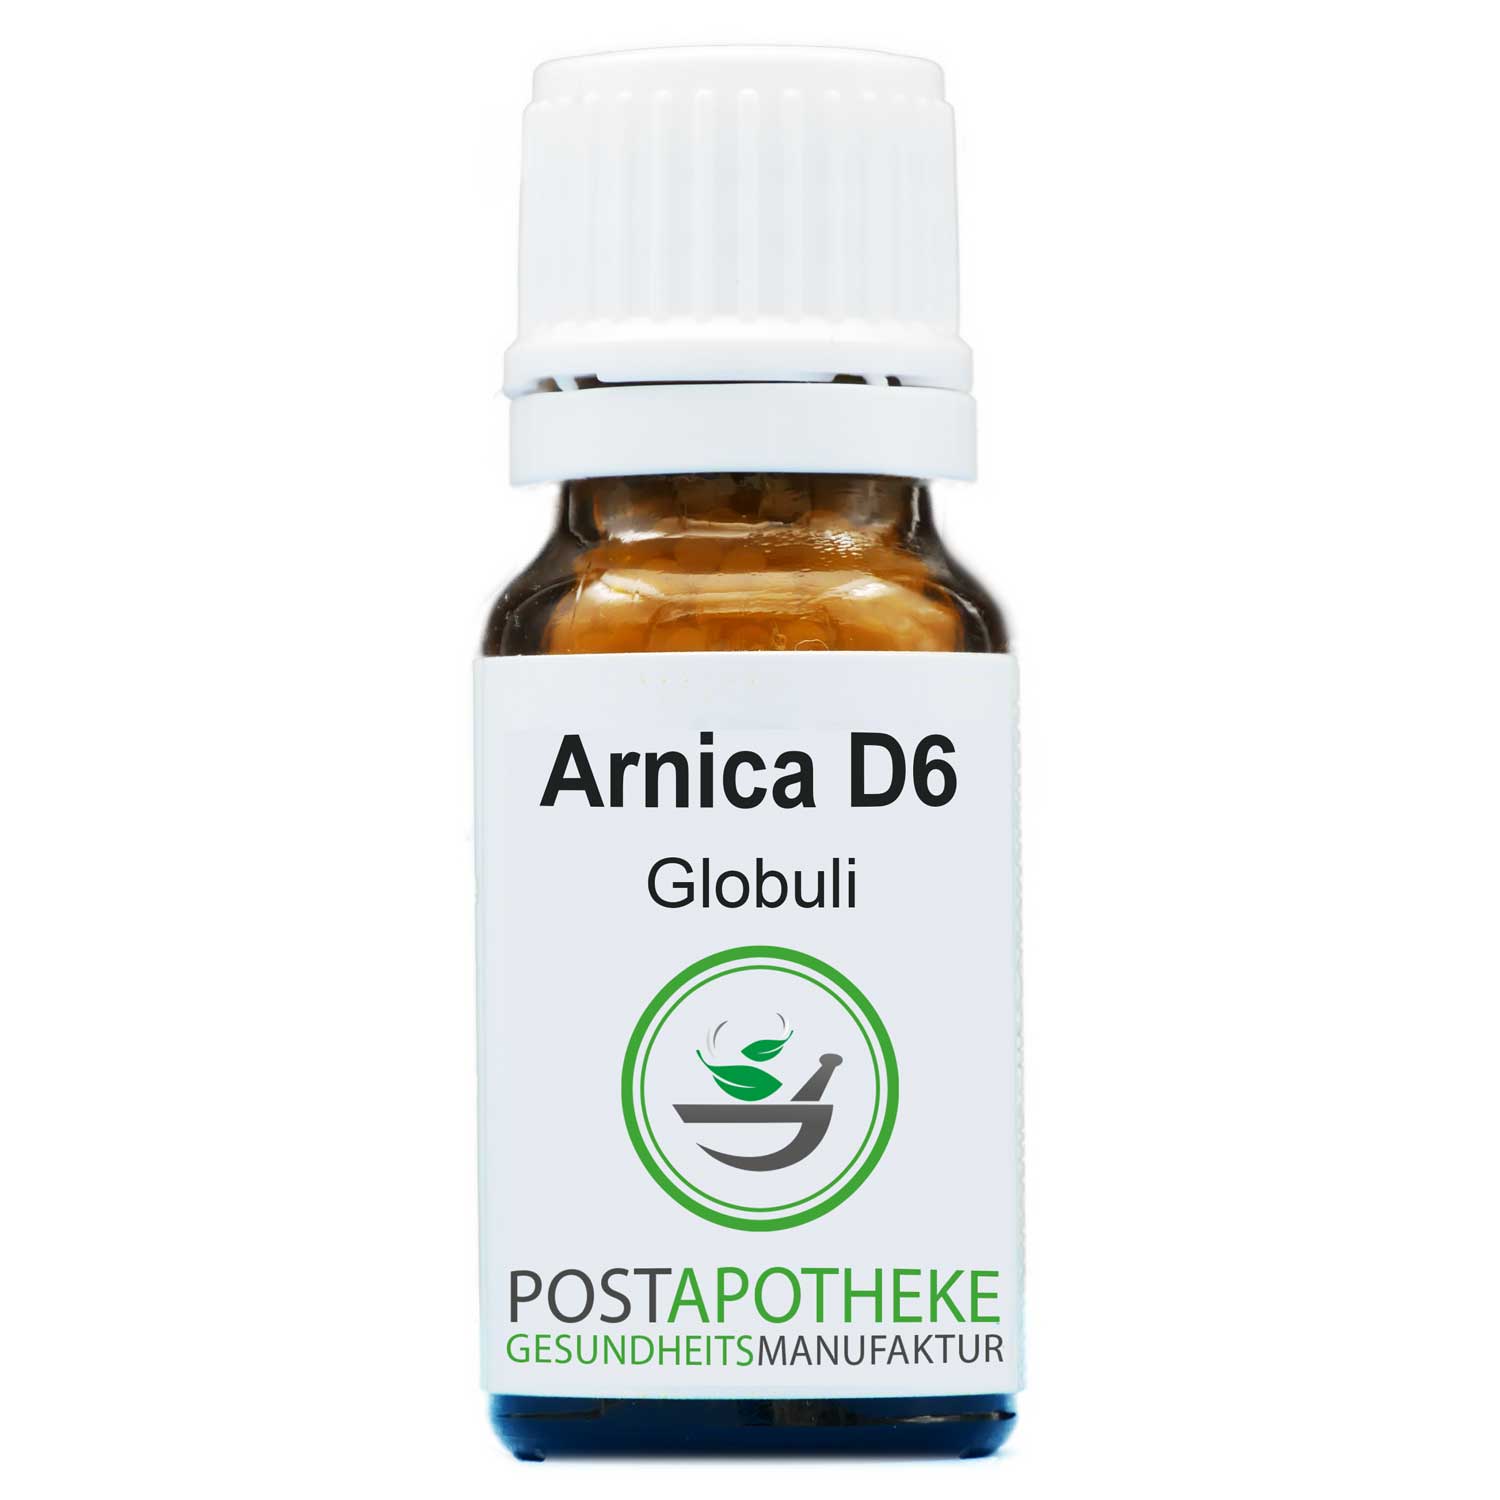 Arnica-d6-globuli-post-apotheke-homoeopathisch-top-qualitaet-guenstig kaufen